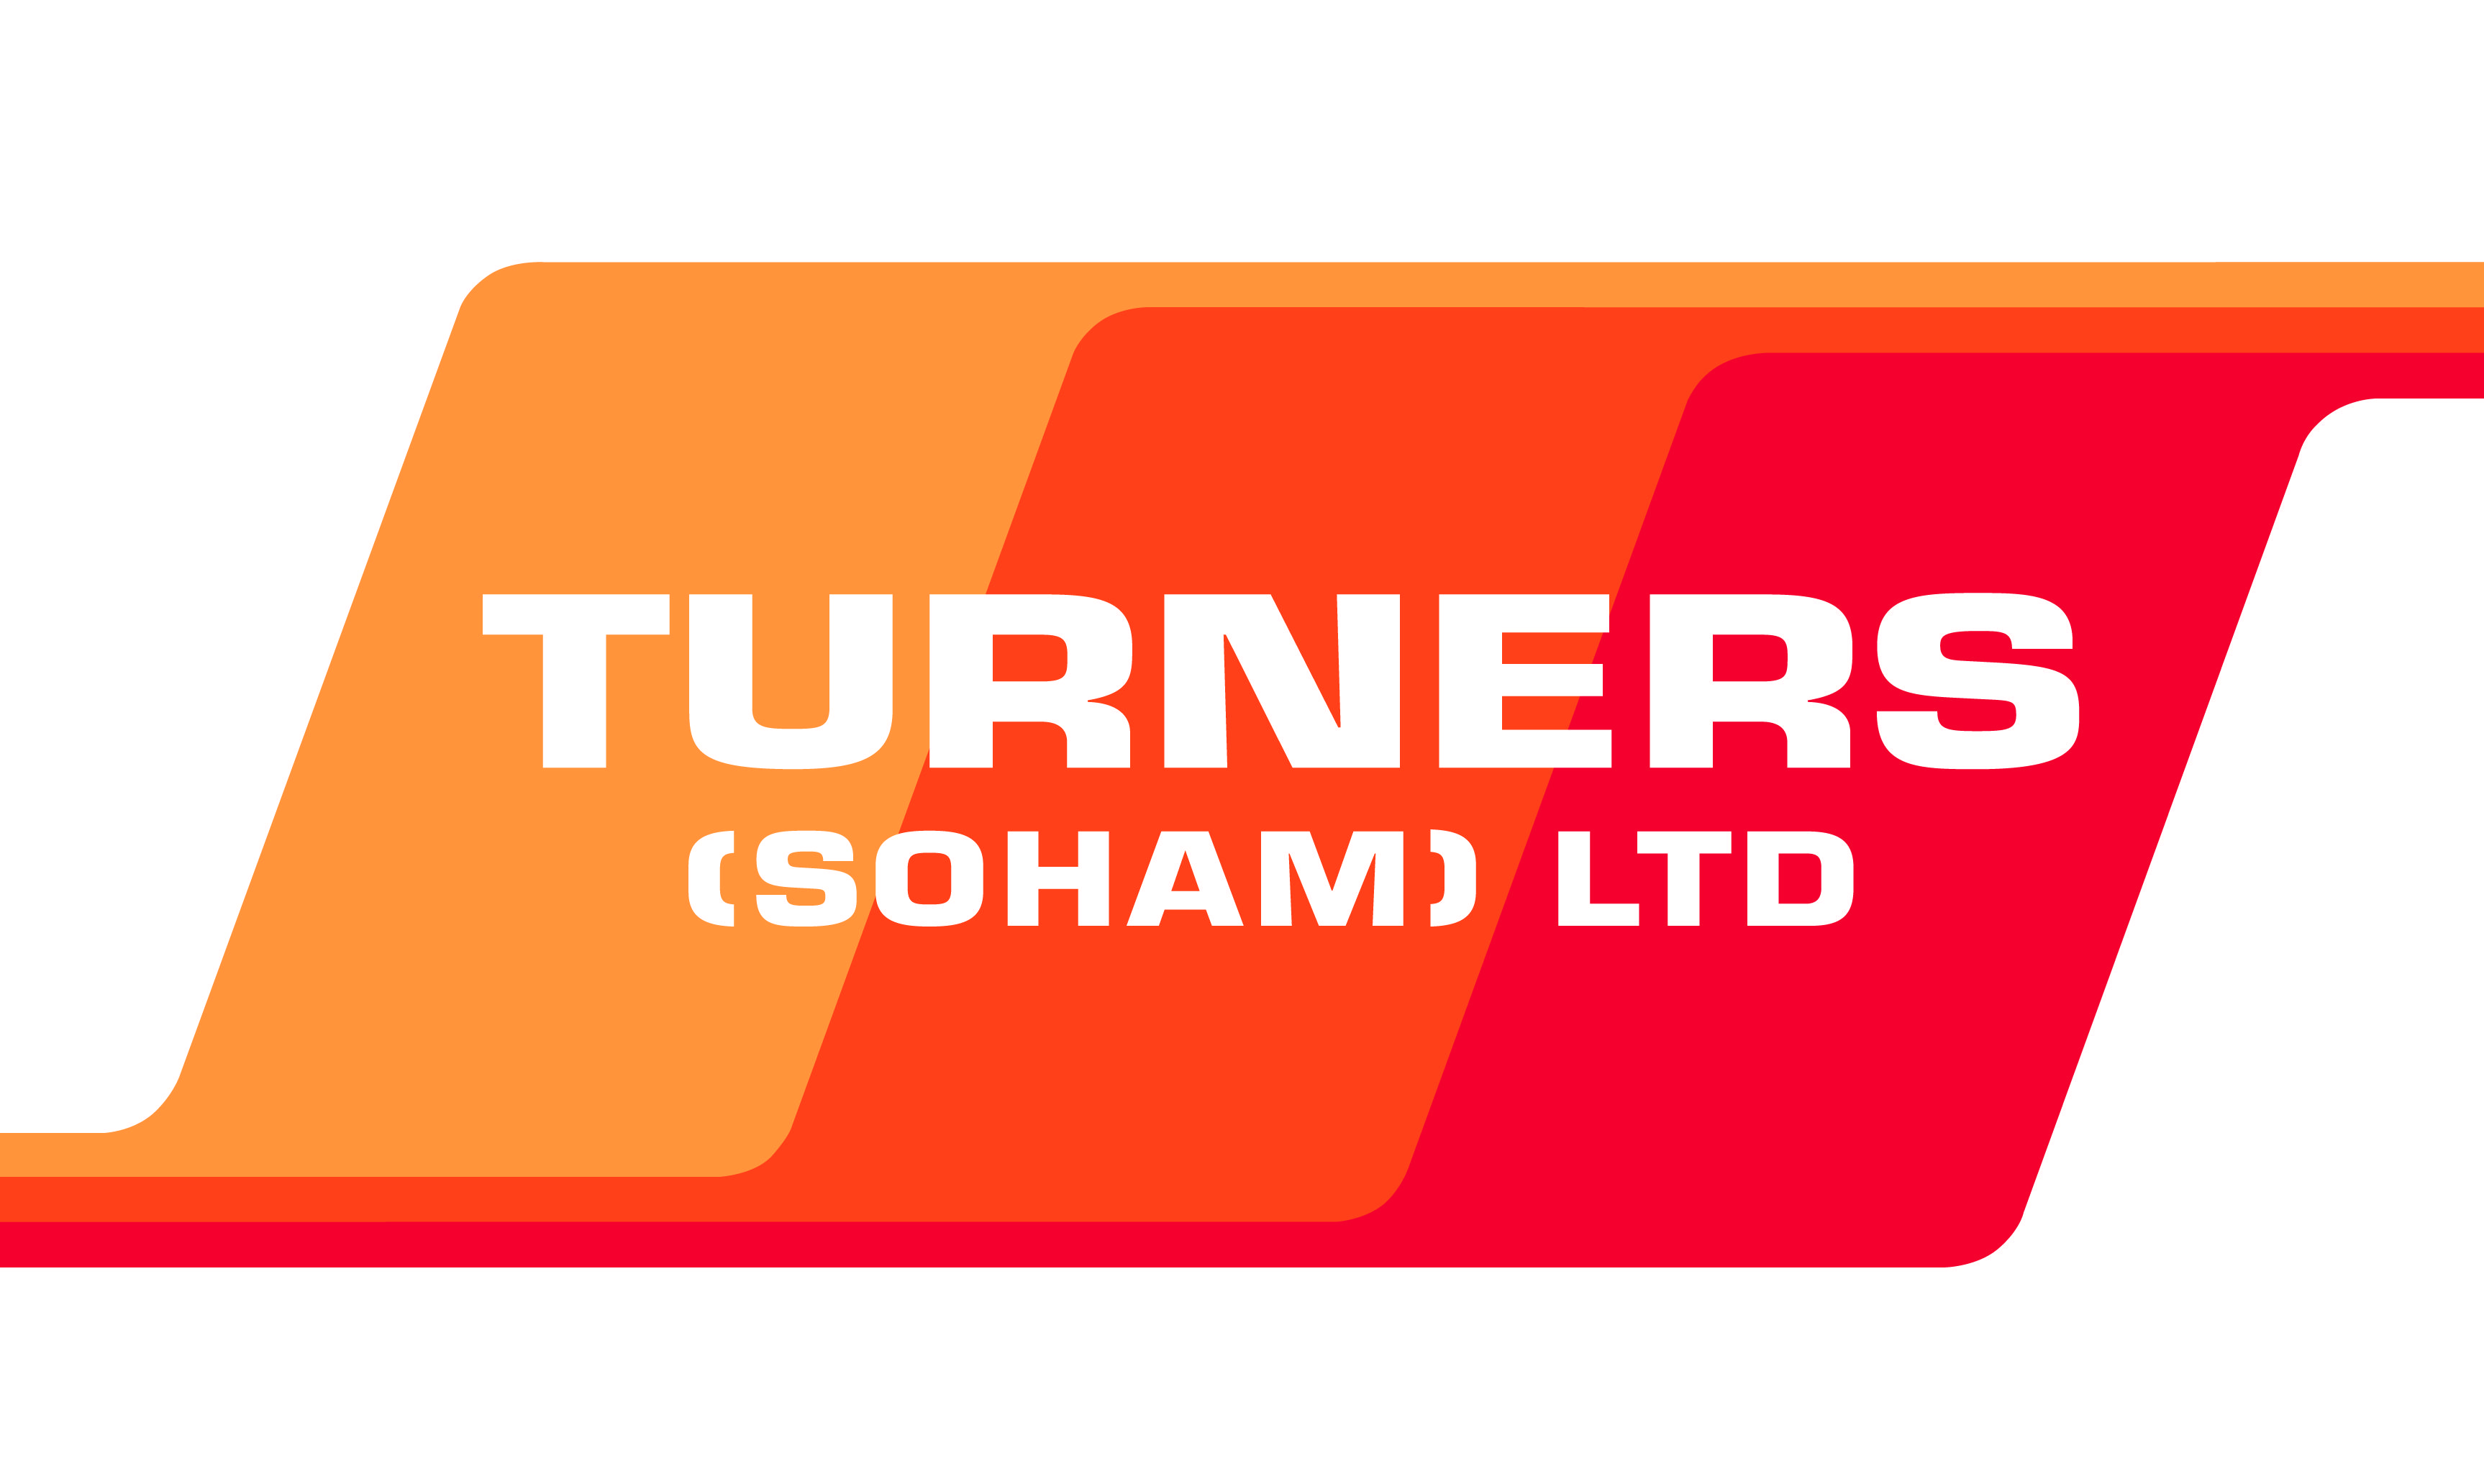 Turner's Logo - Turners Soham Ltd logo - Smartanalysis customer - Descartes Systems ...